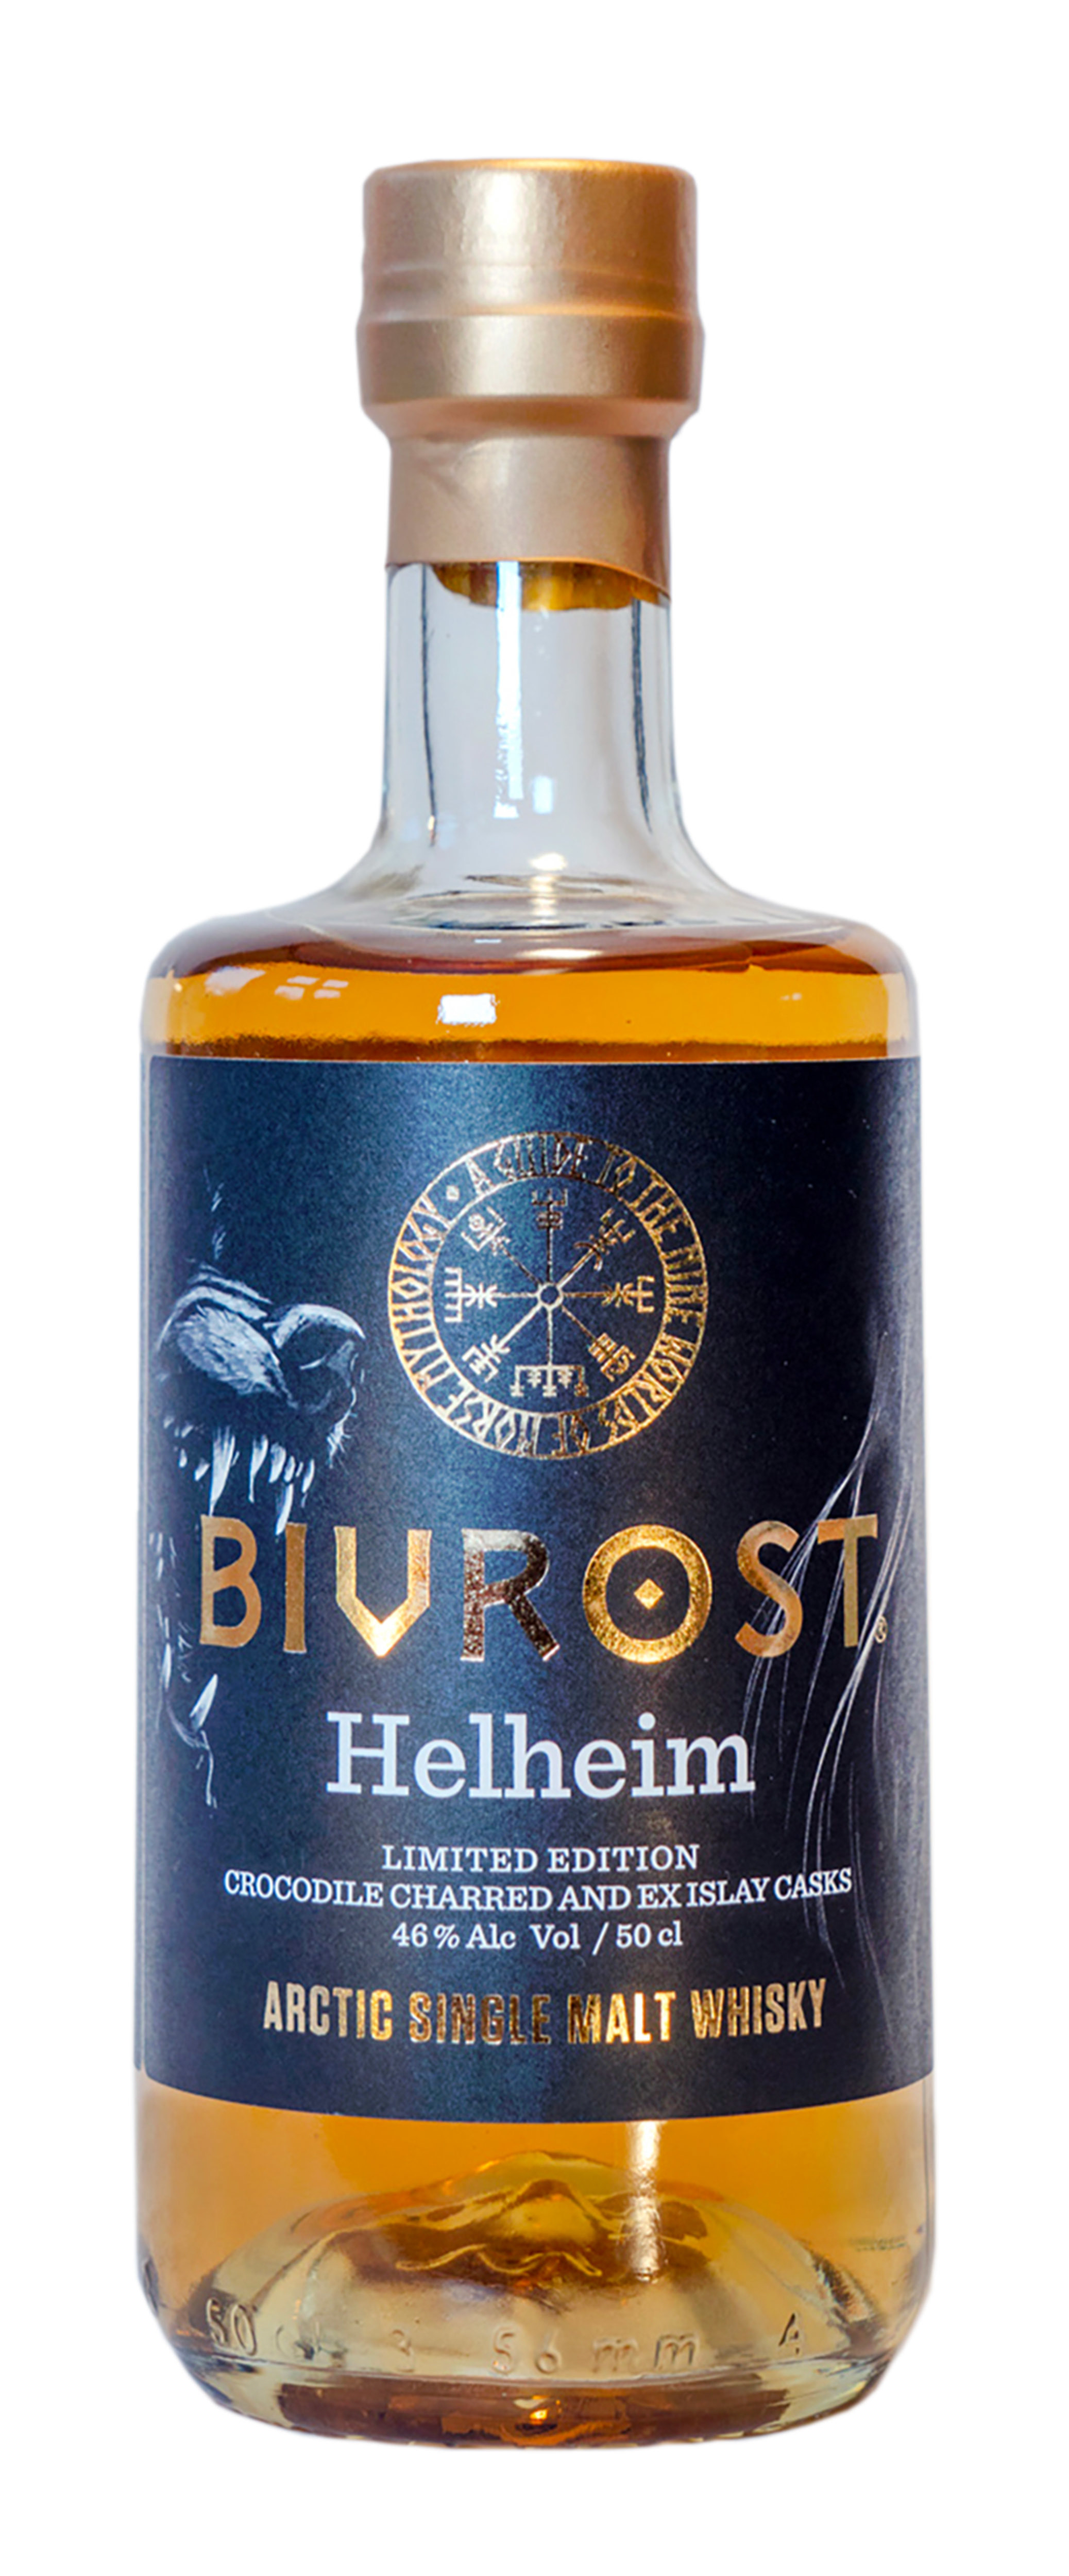 Bivrost Helheim Arctic Single Malt Whisky